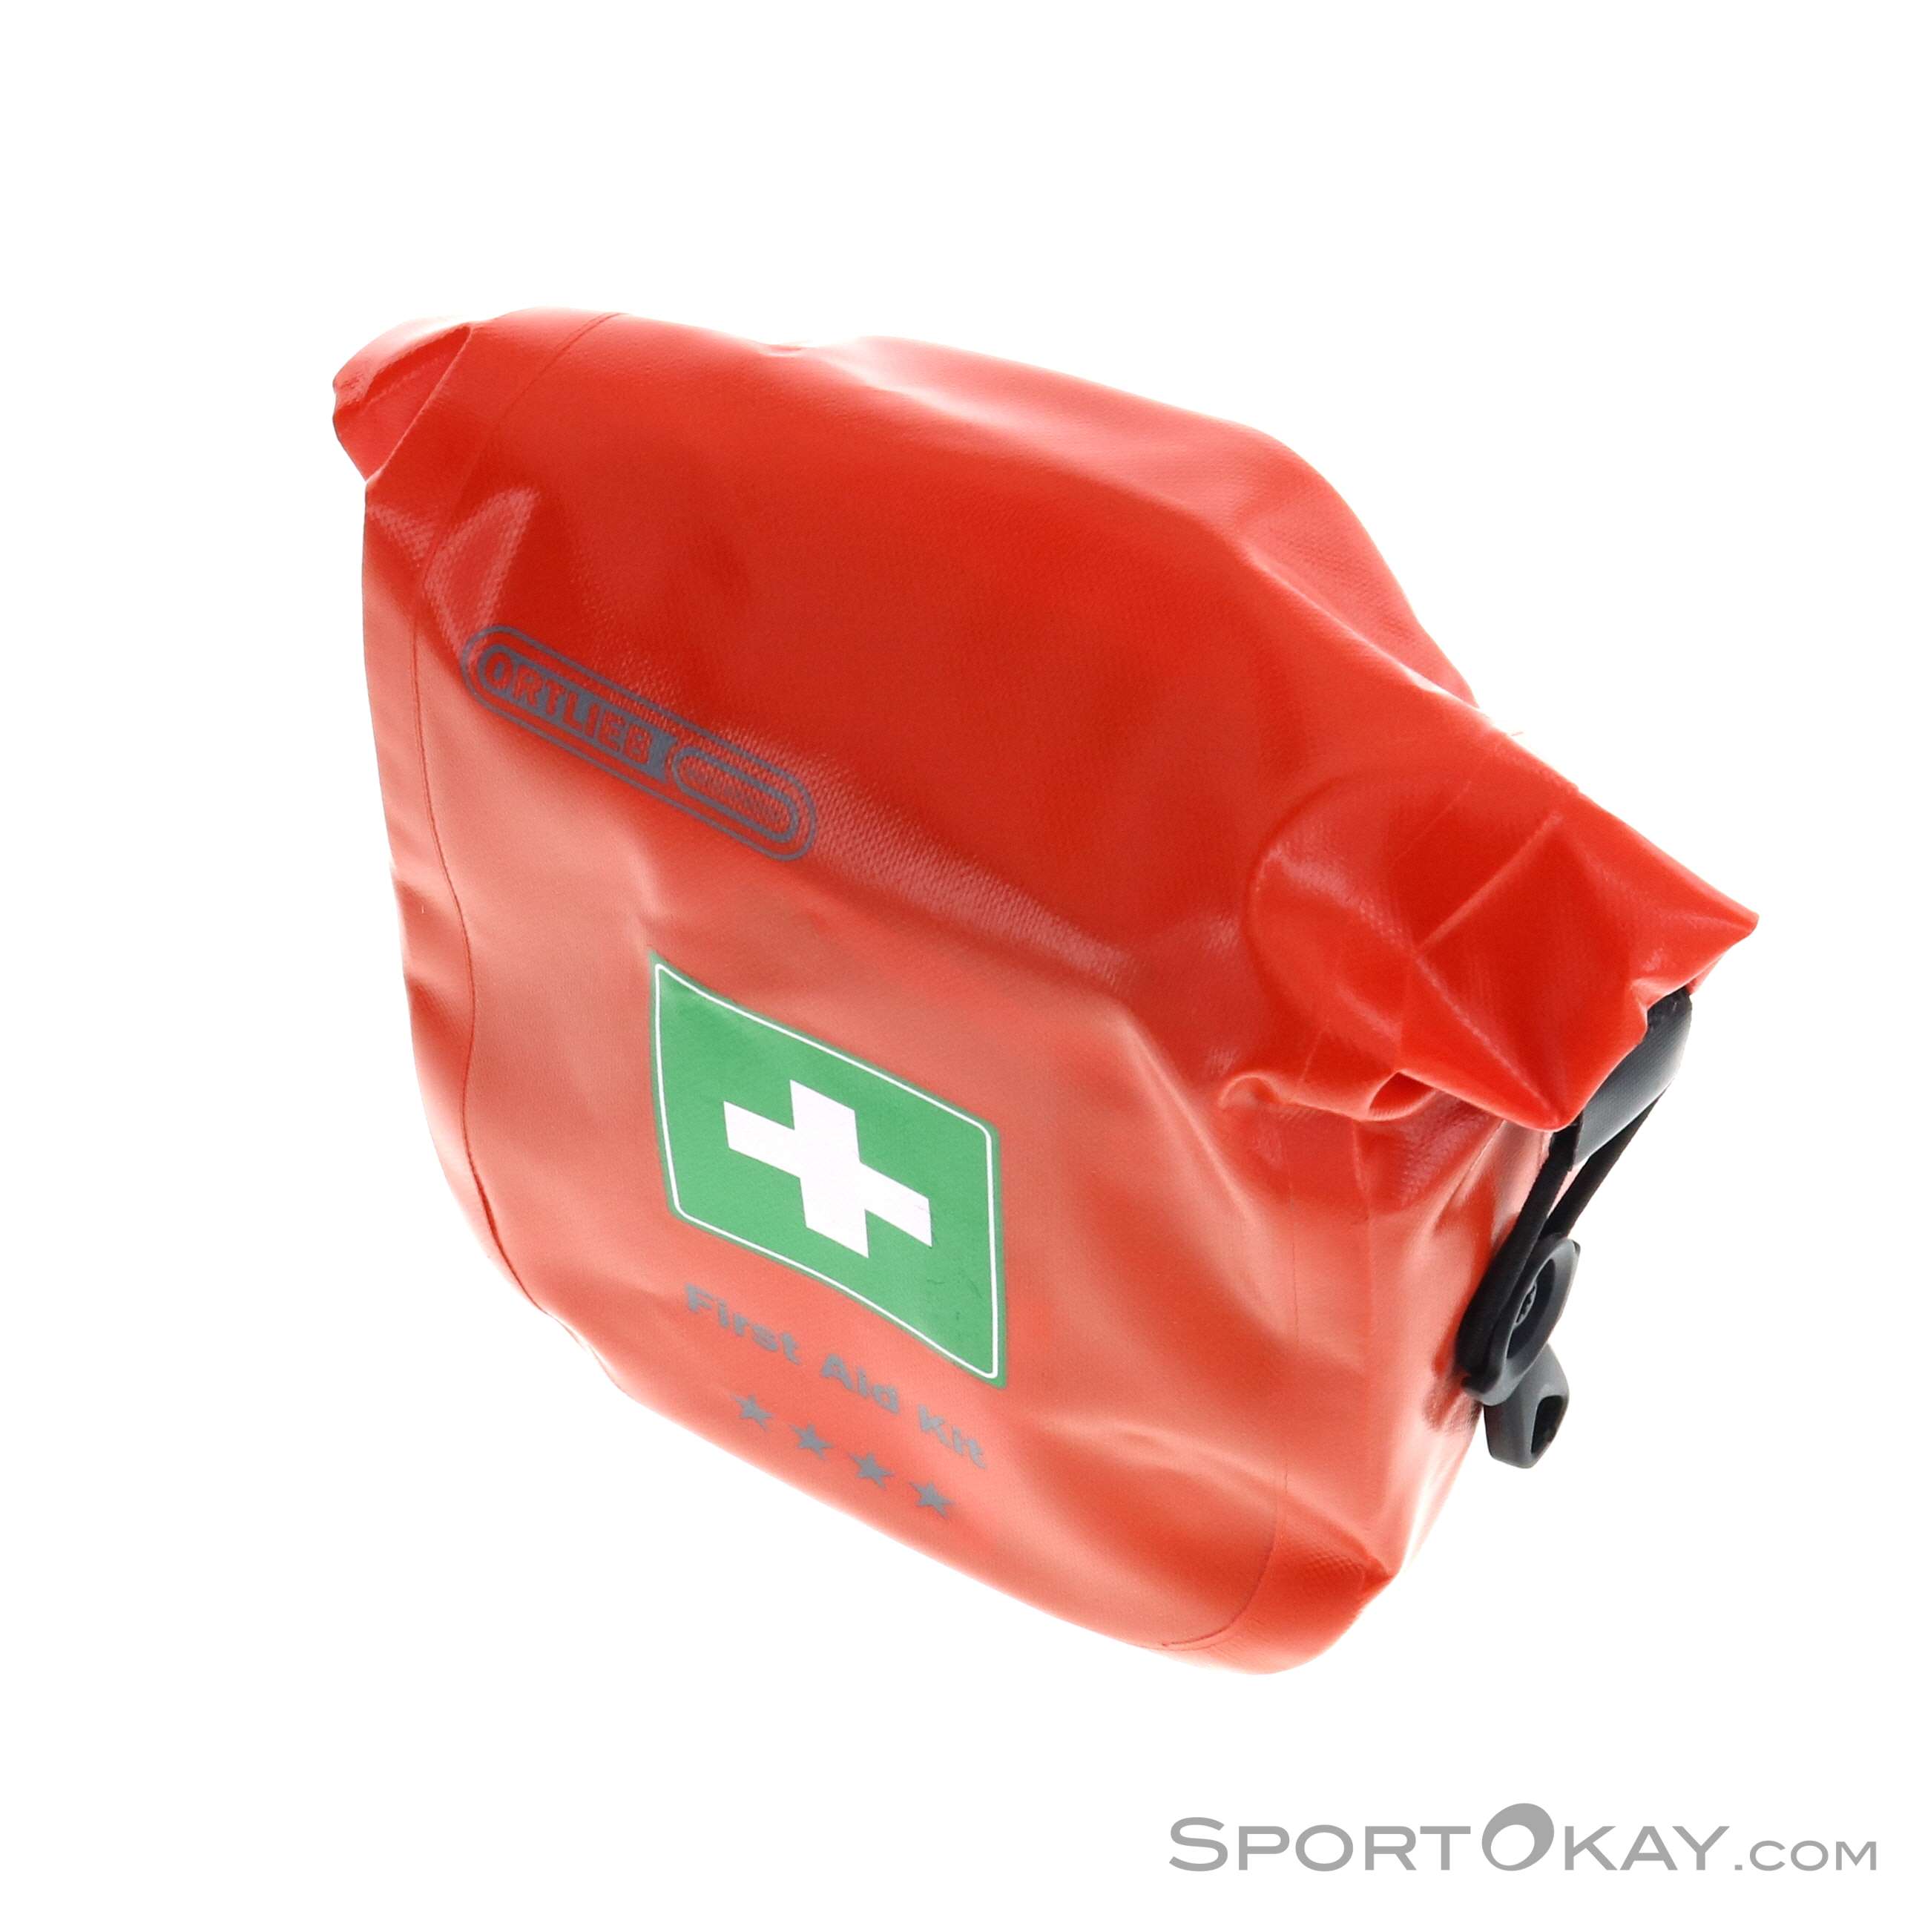 Ortlieb First Aid Kit Medium Erste Hilfe Set - Erste Hilfe Sets - Camping -  Outdoor - Alle